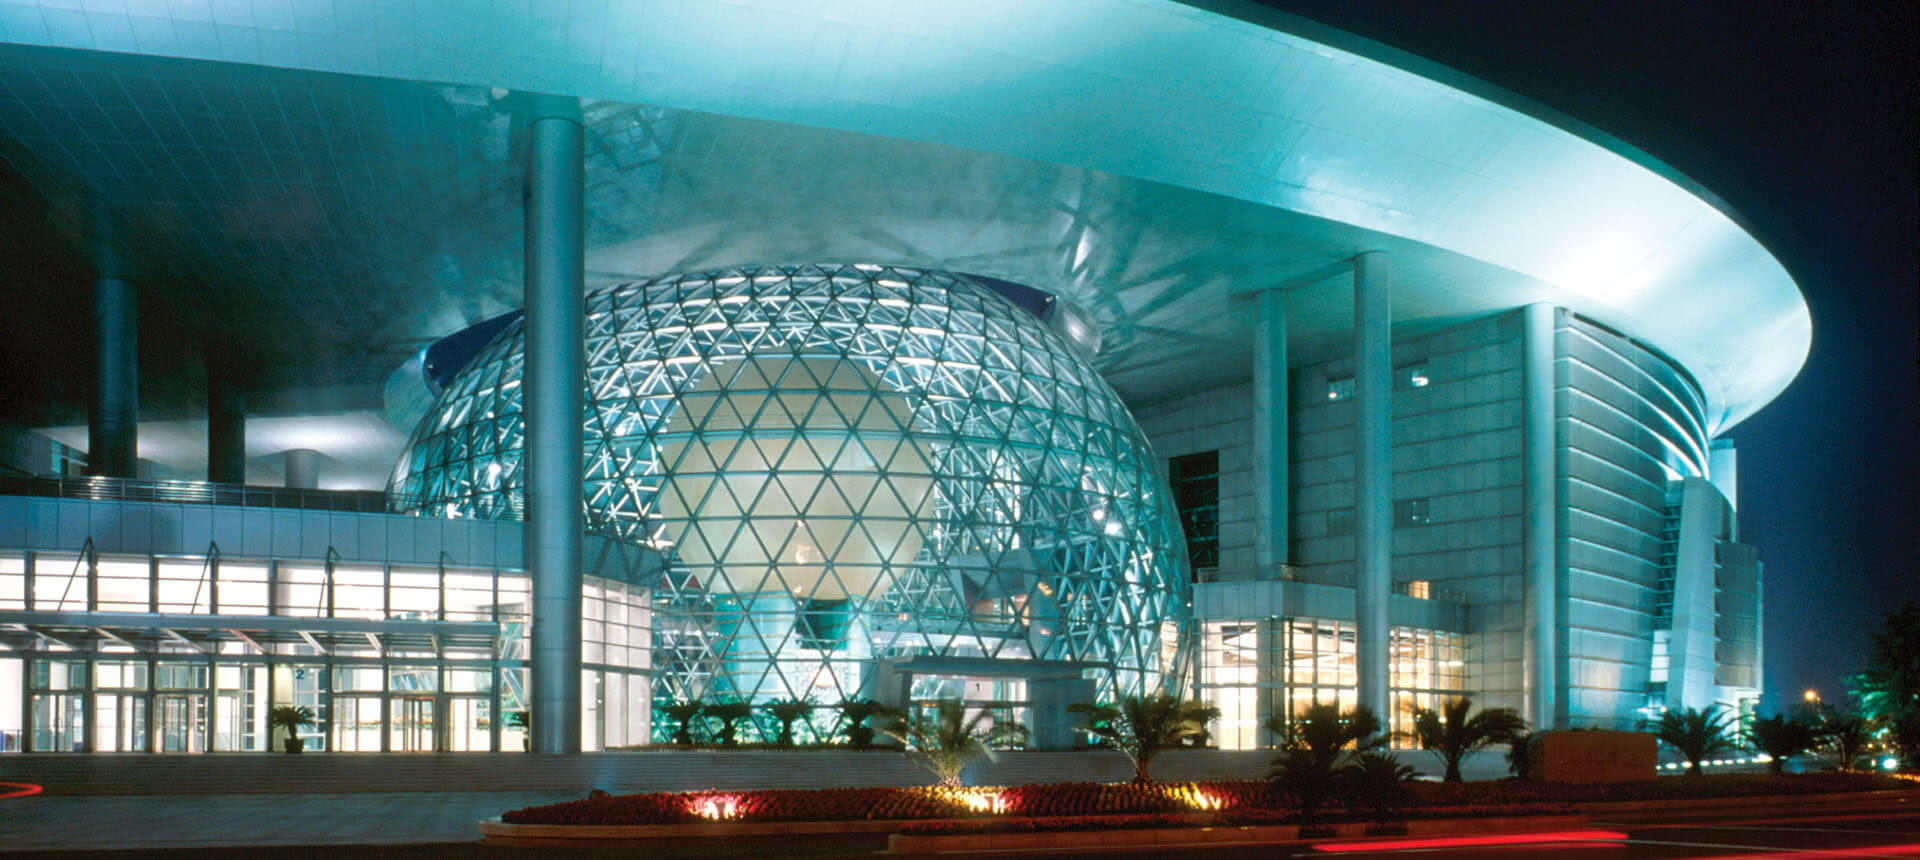 Shanghai Science and Technology Museum - CallisonRTKL